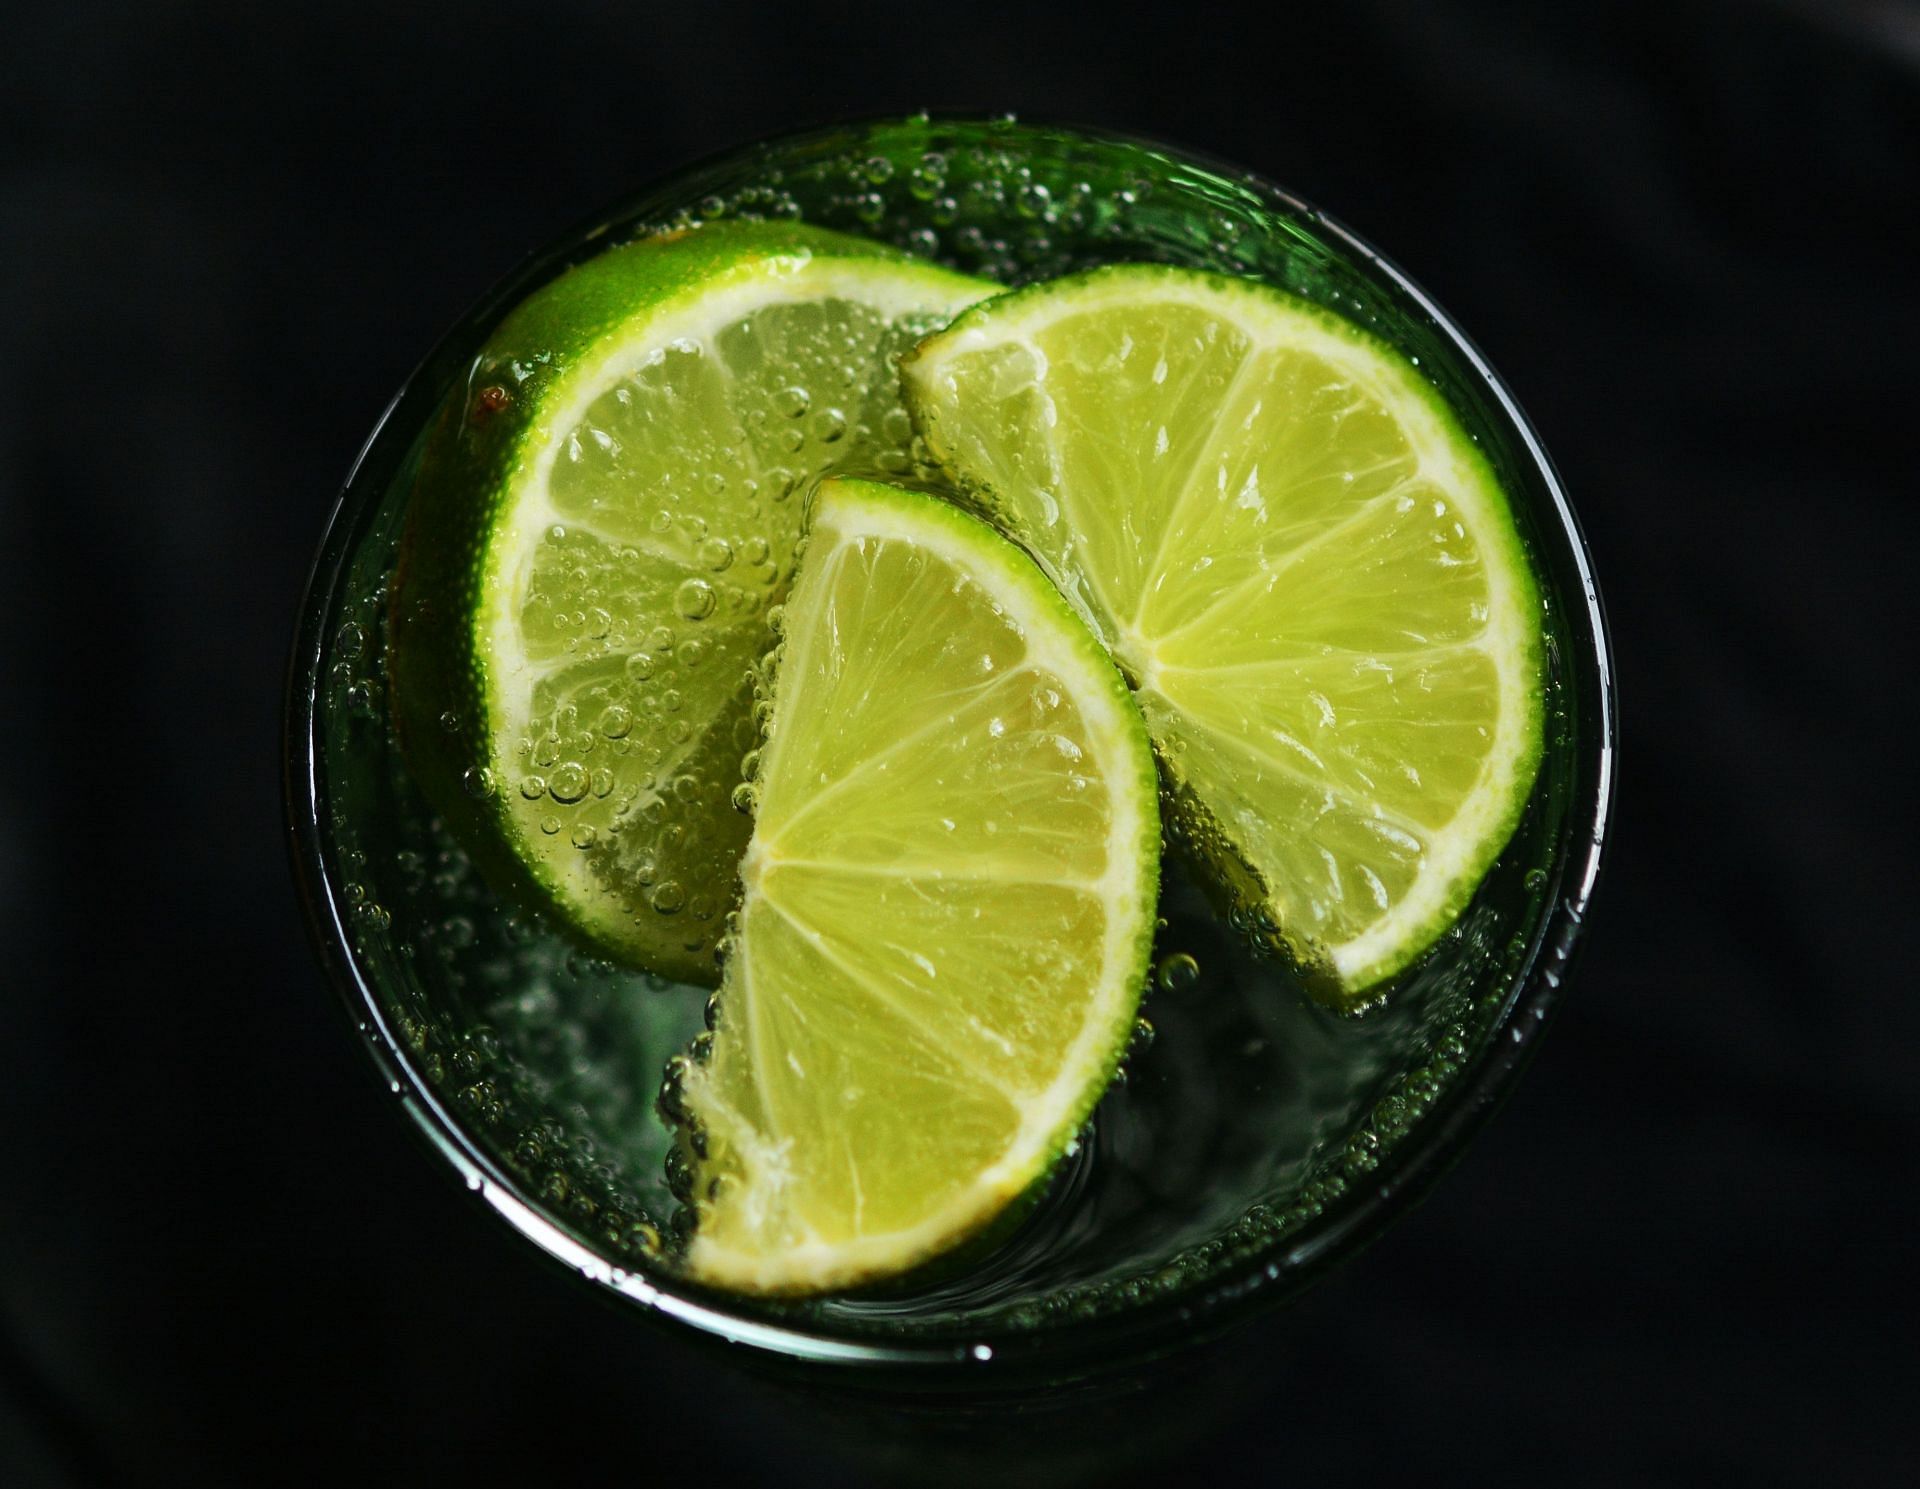 Lemon water helps you lose weight as it imparts a sense of fullness. (Image via Pexels/ Pixabay)